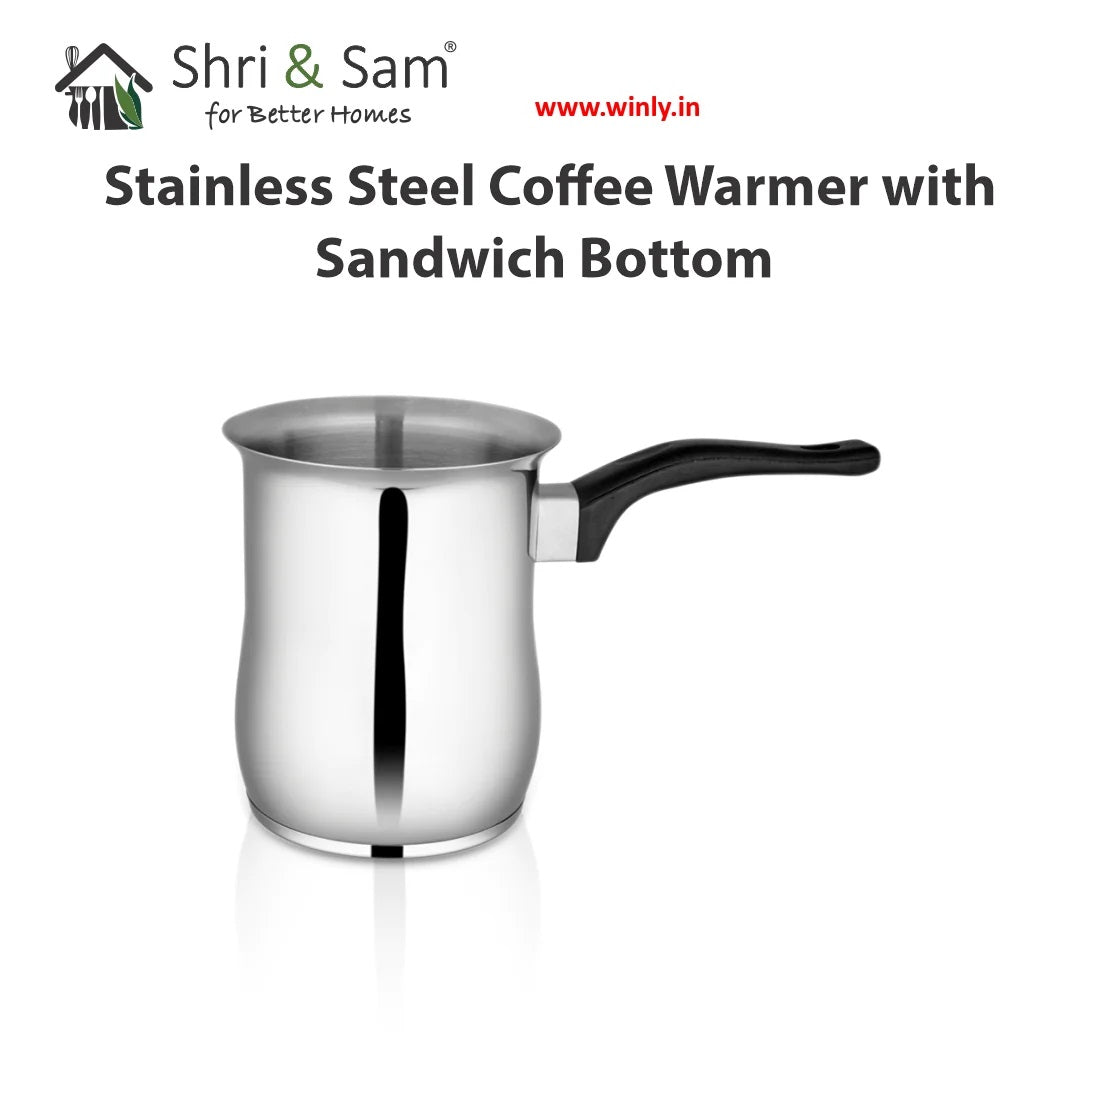 Shri & Sam Stainless Steel Coffee Warmer with Sandwich Bottom